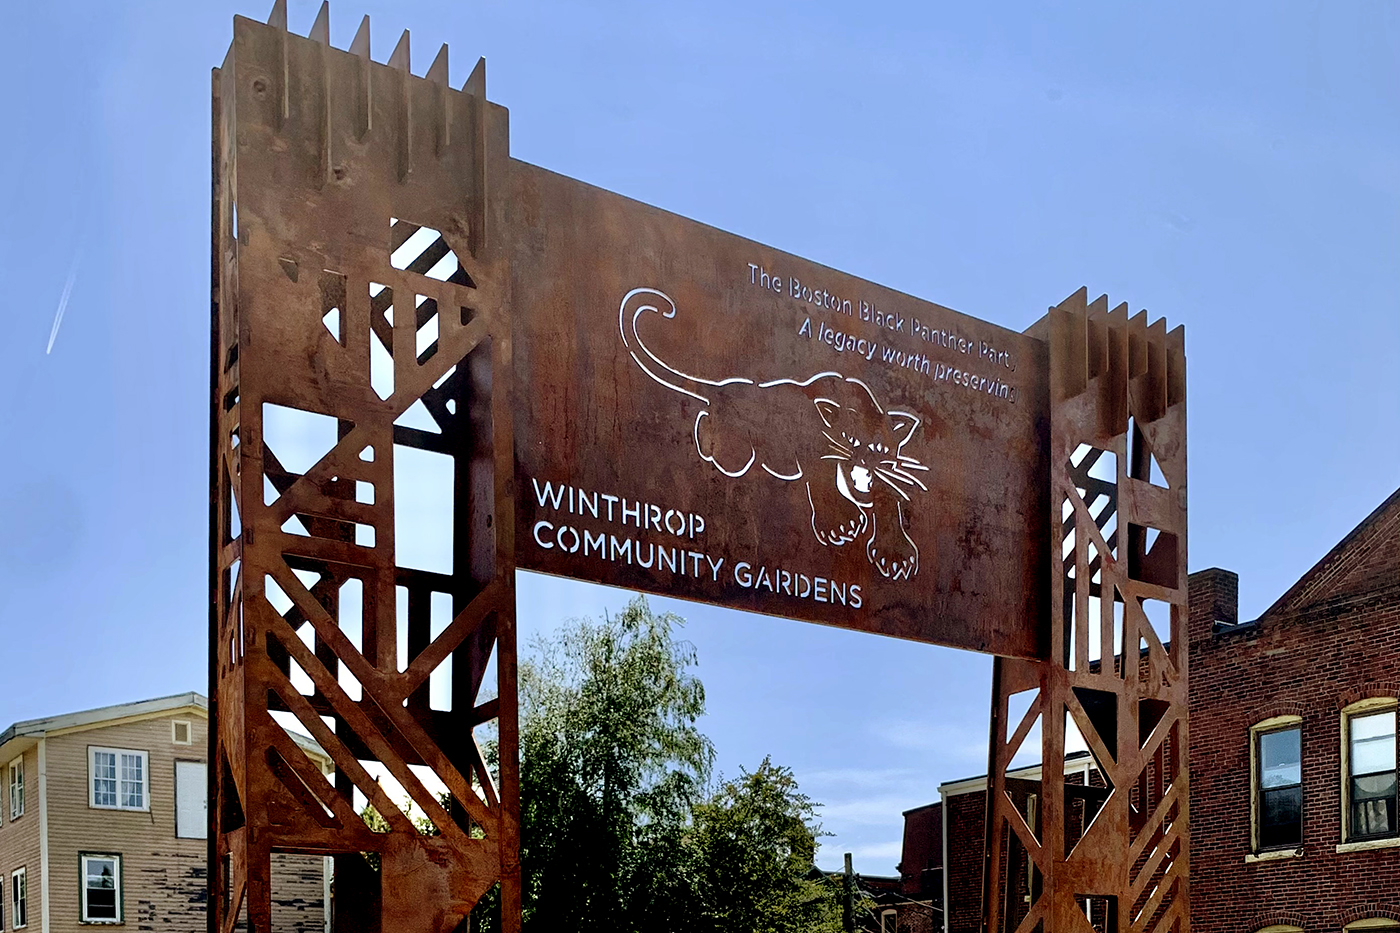 Winthrop Community Gardens Black Panther art installation